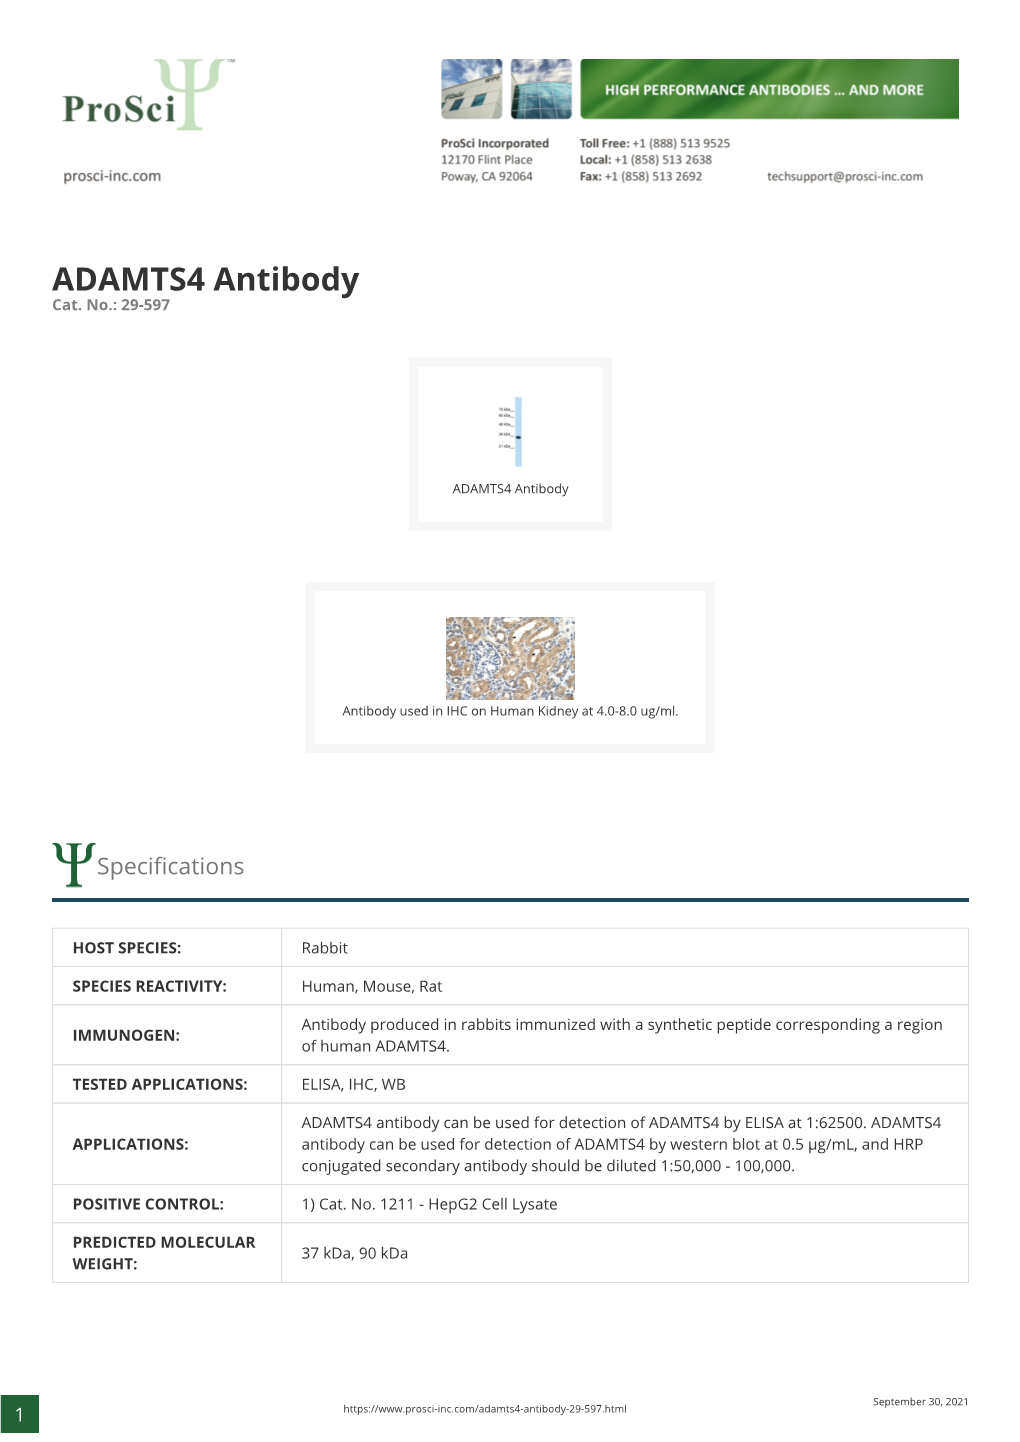 ADAMTS4 Antibody Cat